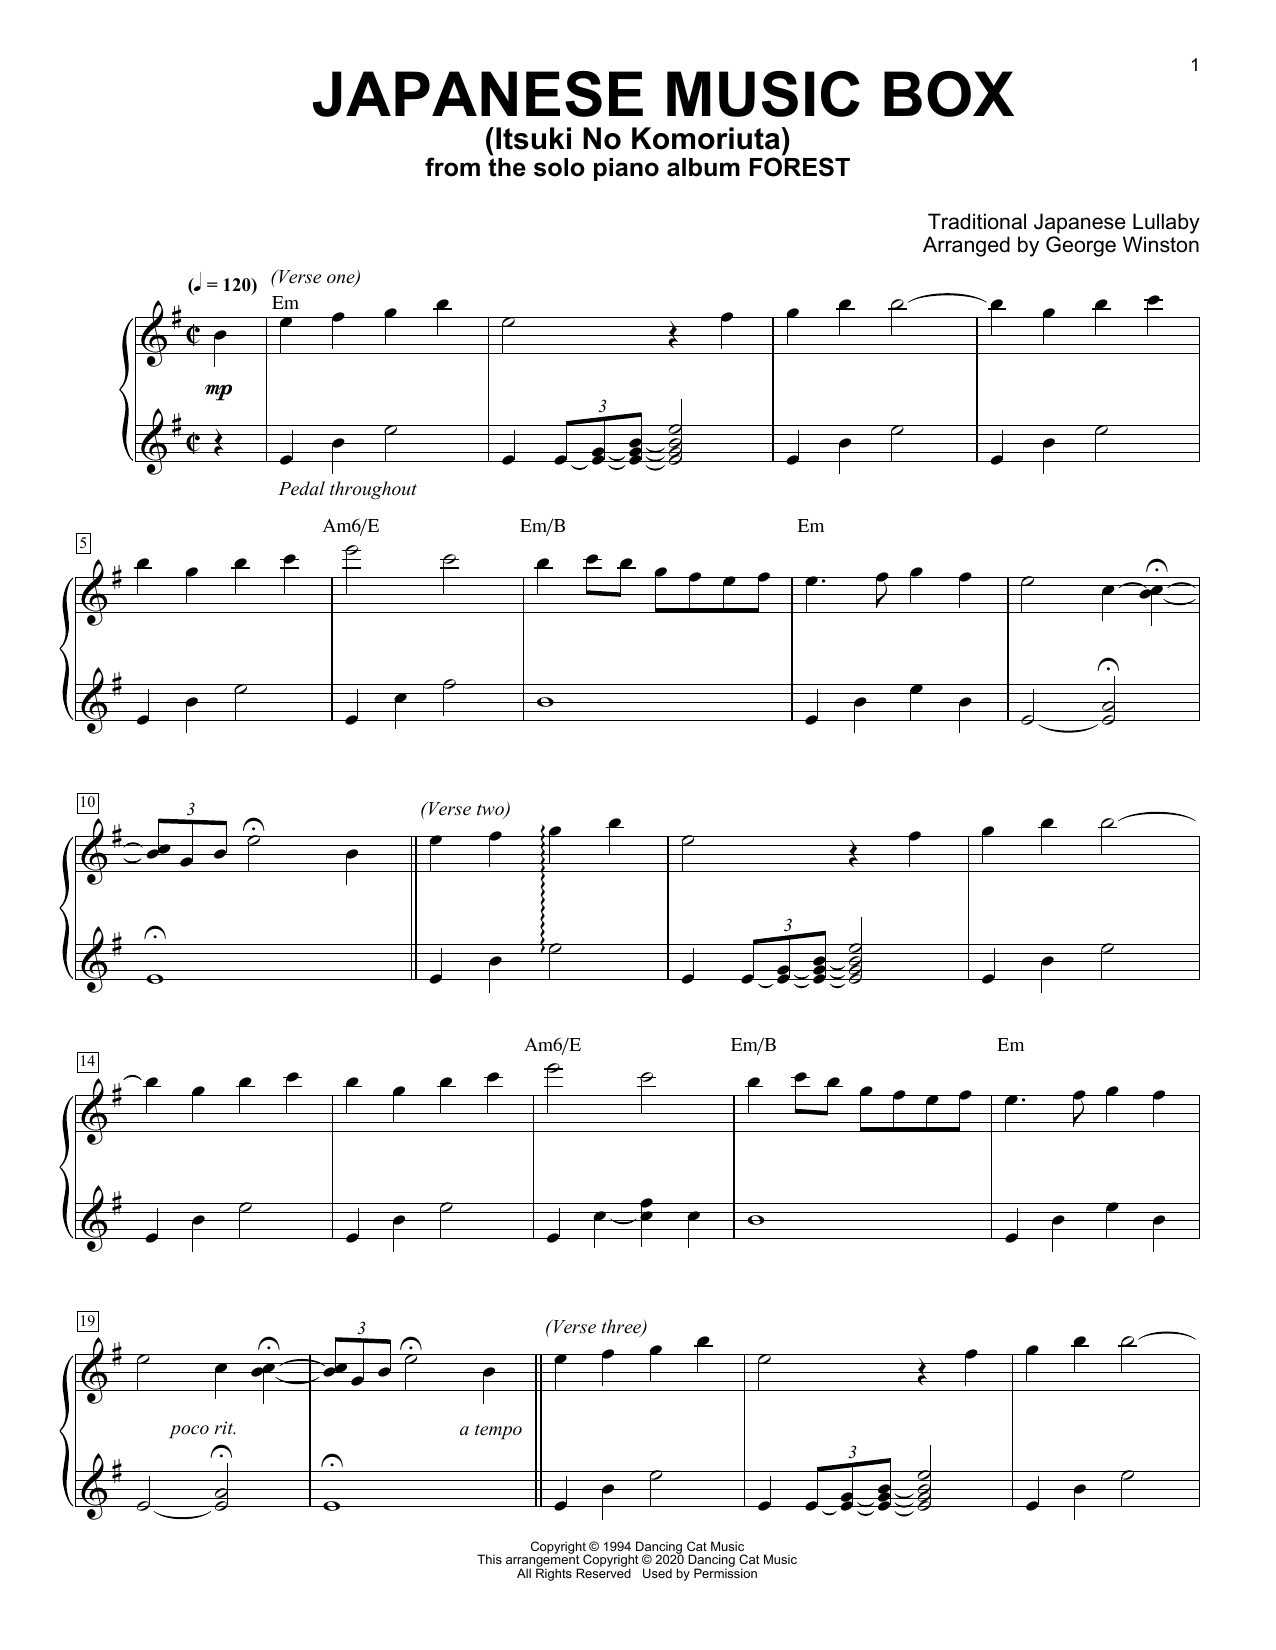 George Winston Japanese Music Box (Itsuki No Komoriuta) Sheet Music Notes & Chords for Piano Solo - Download or Print PDF